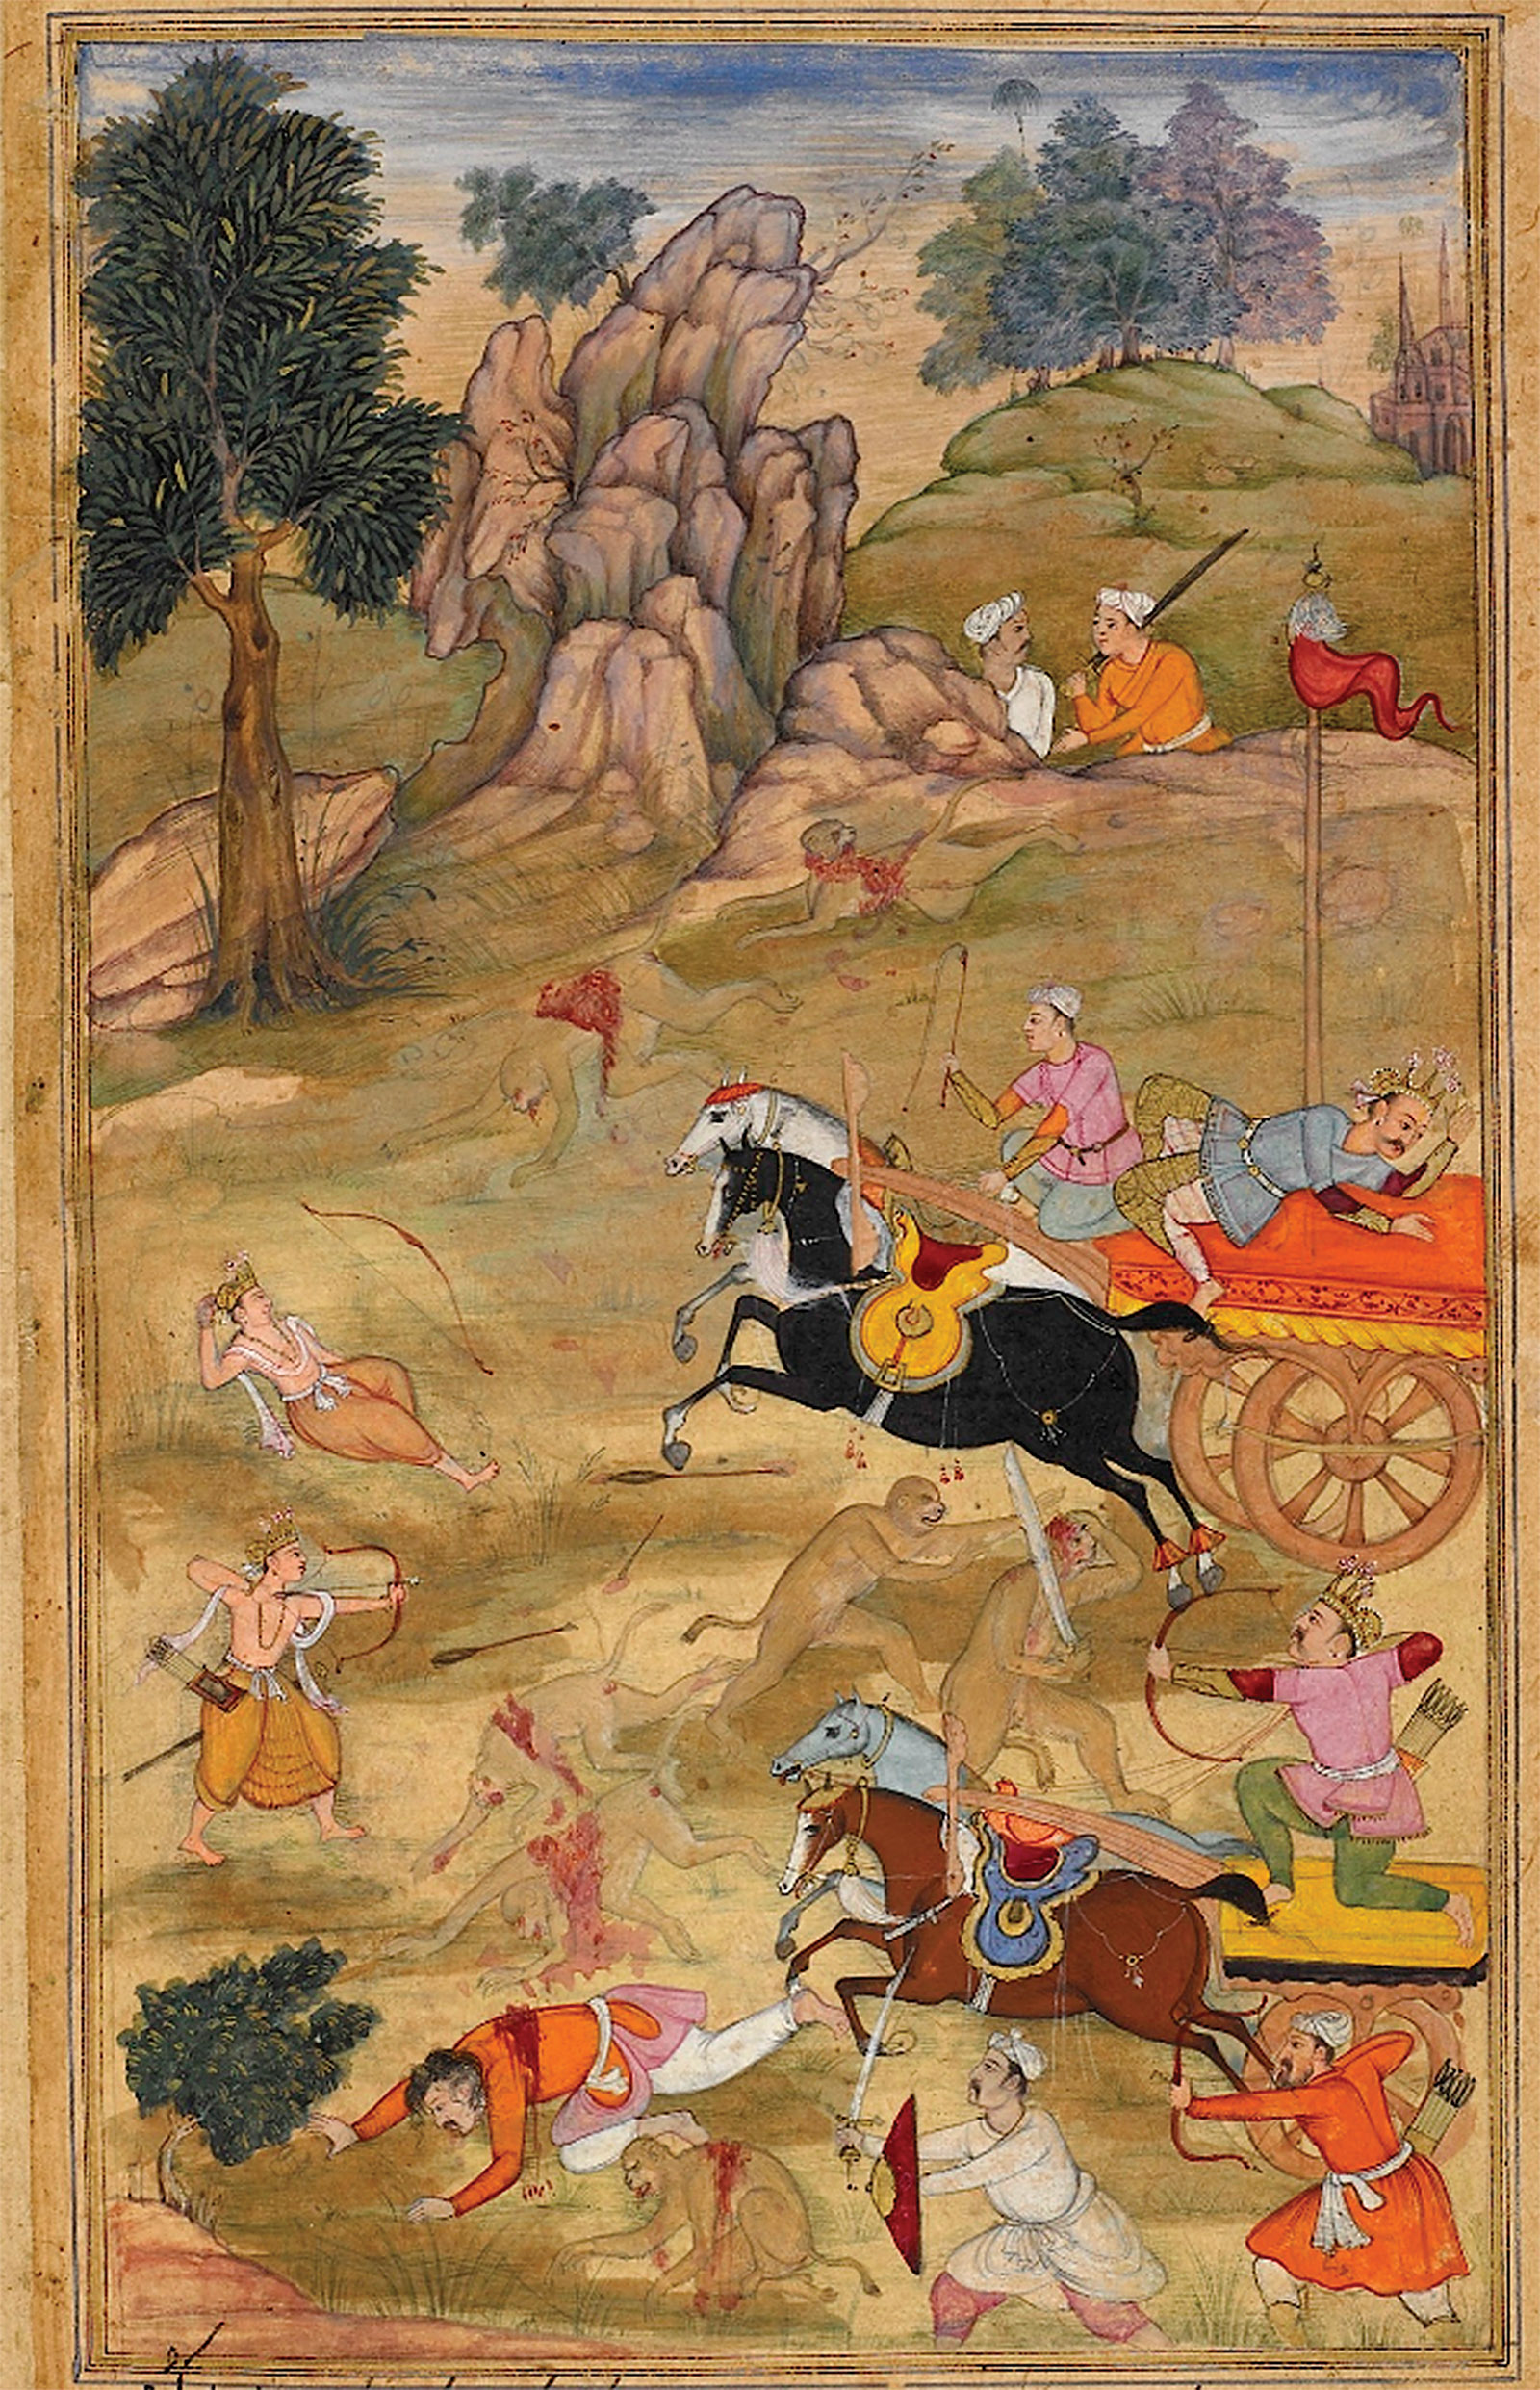 ‘Kusa and Lava defeating Bharata, Lakshmana, and the monkey army’; from the Razmnamah, a Persian translation of the Mahabharata, 1598